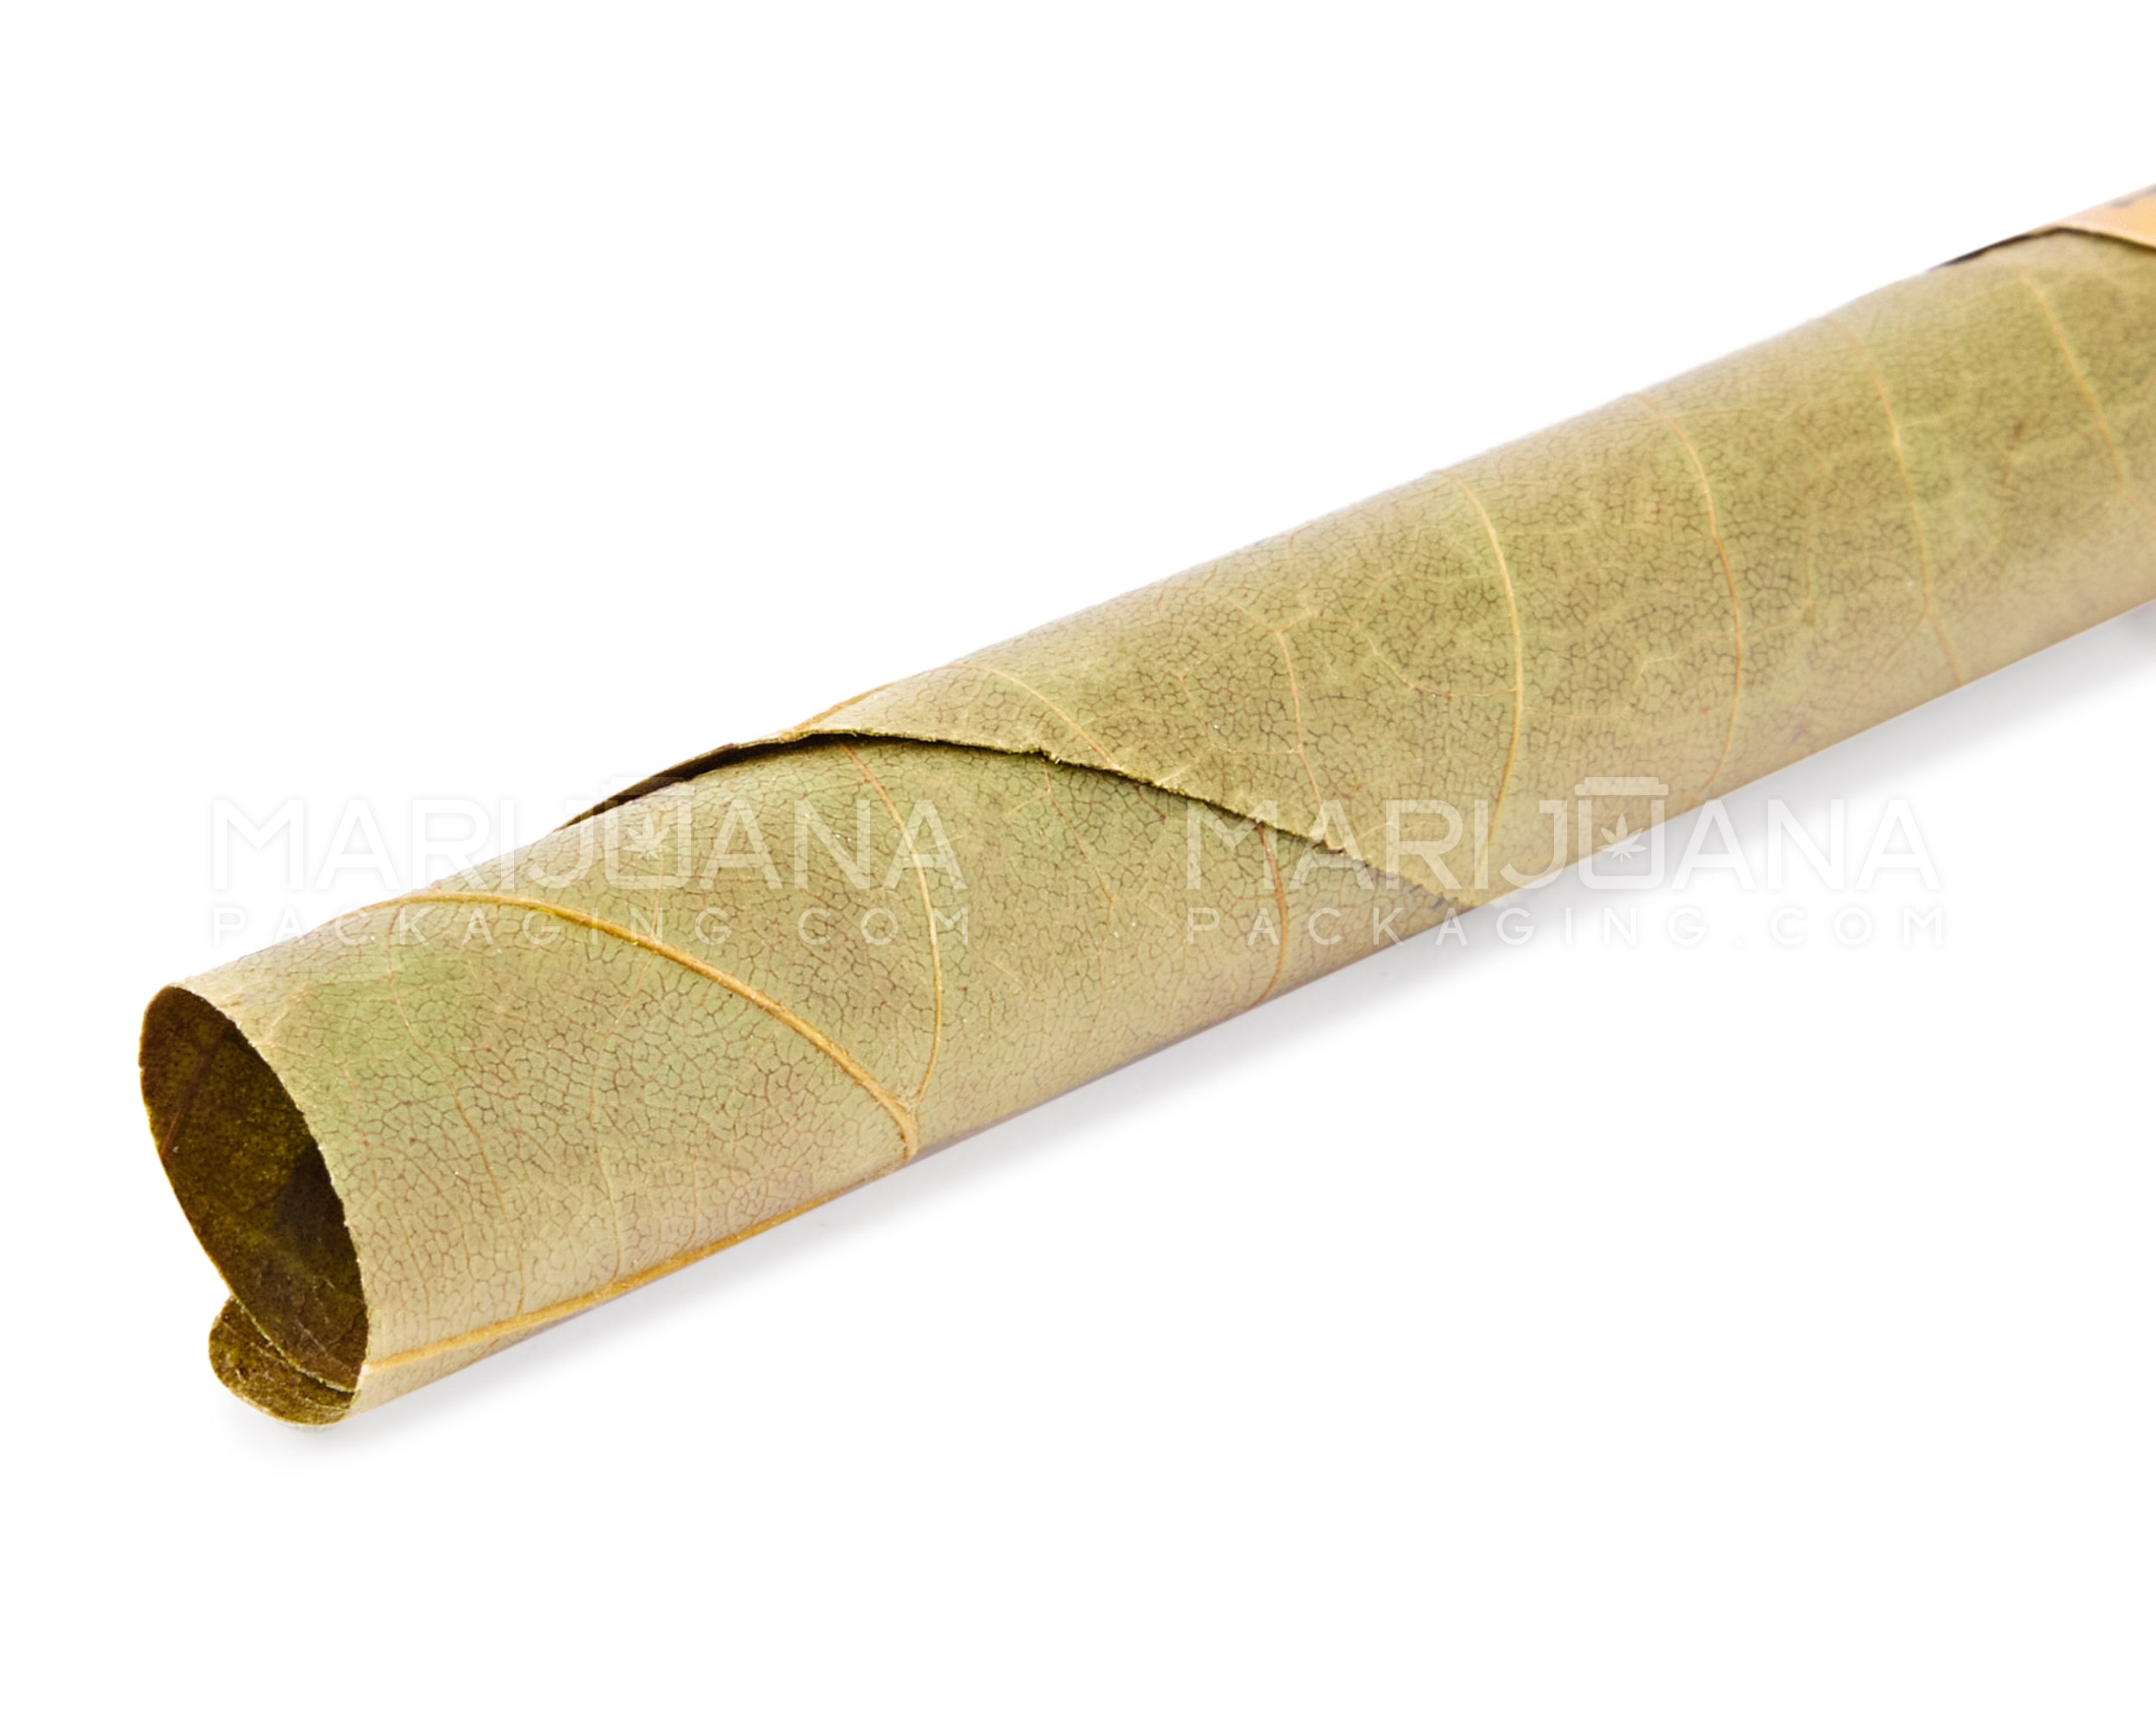 KING PALM | 'Retail Display' Mini Green Natural Leaf Blunt Wraps | 84mm - Mango OG - 20 Count - 7